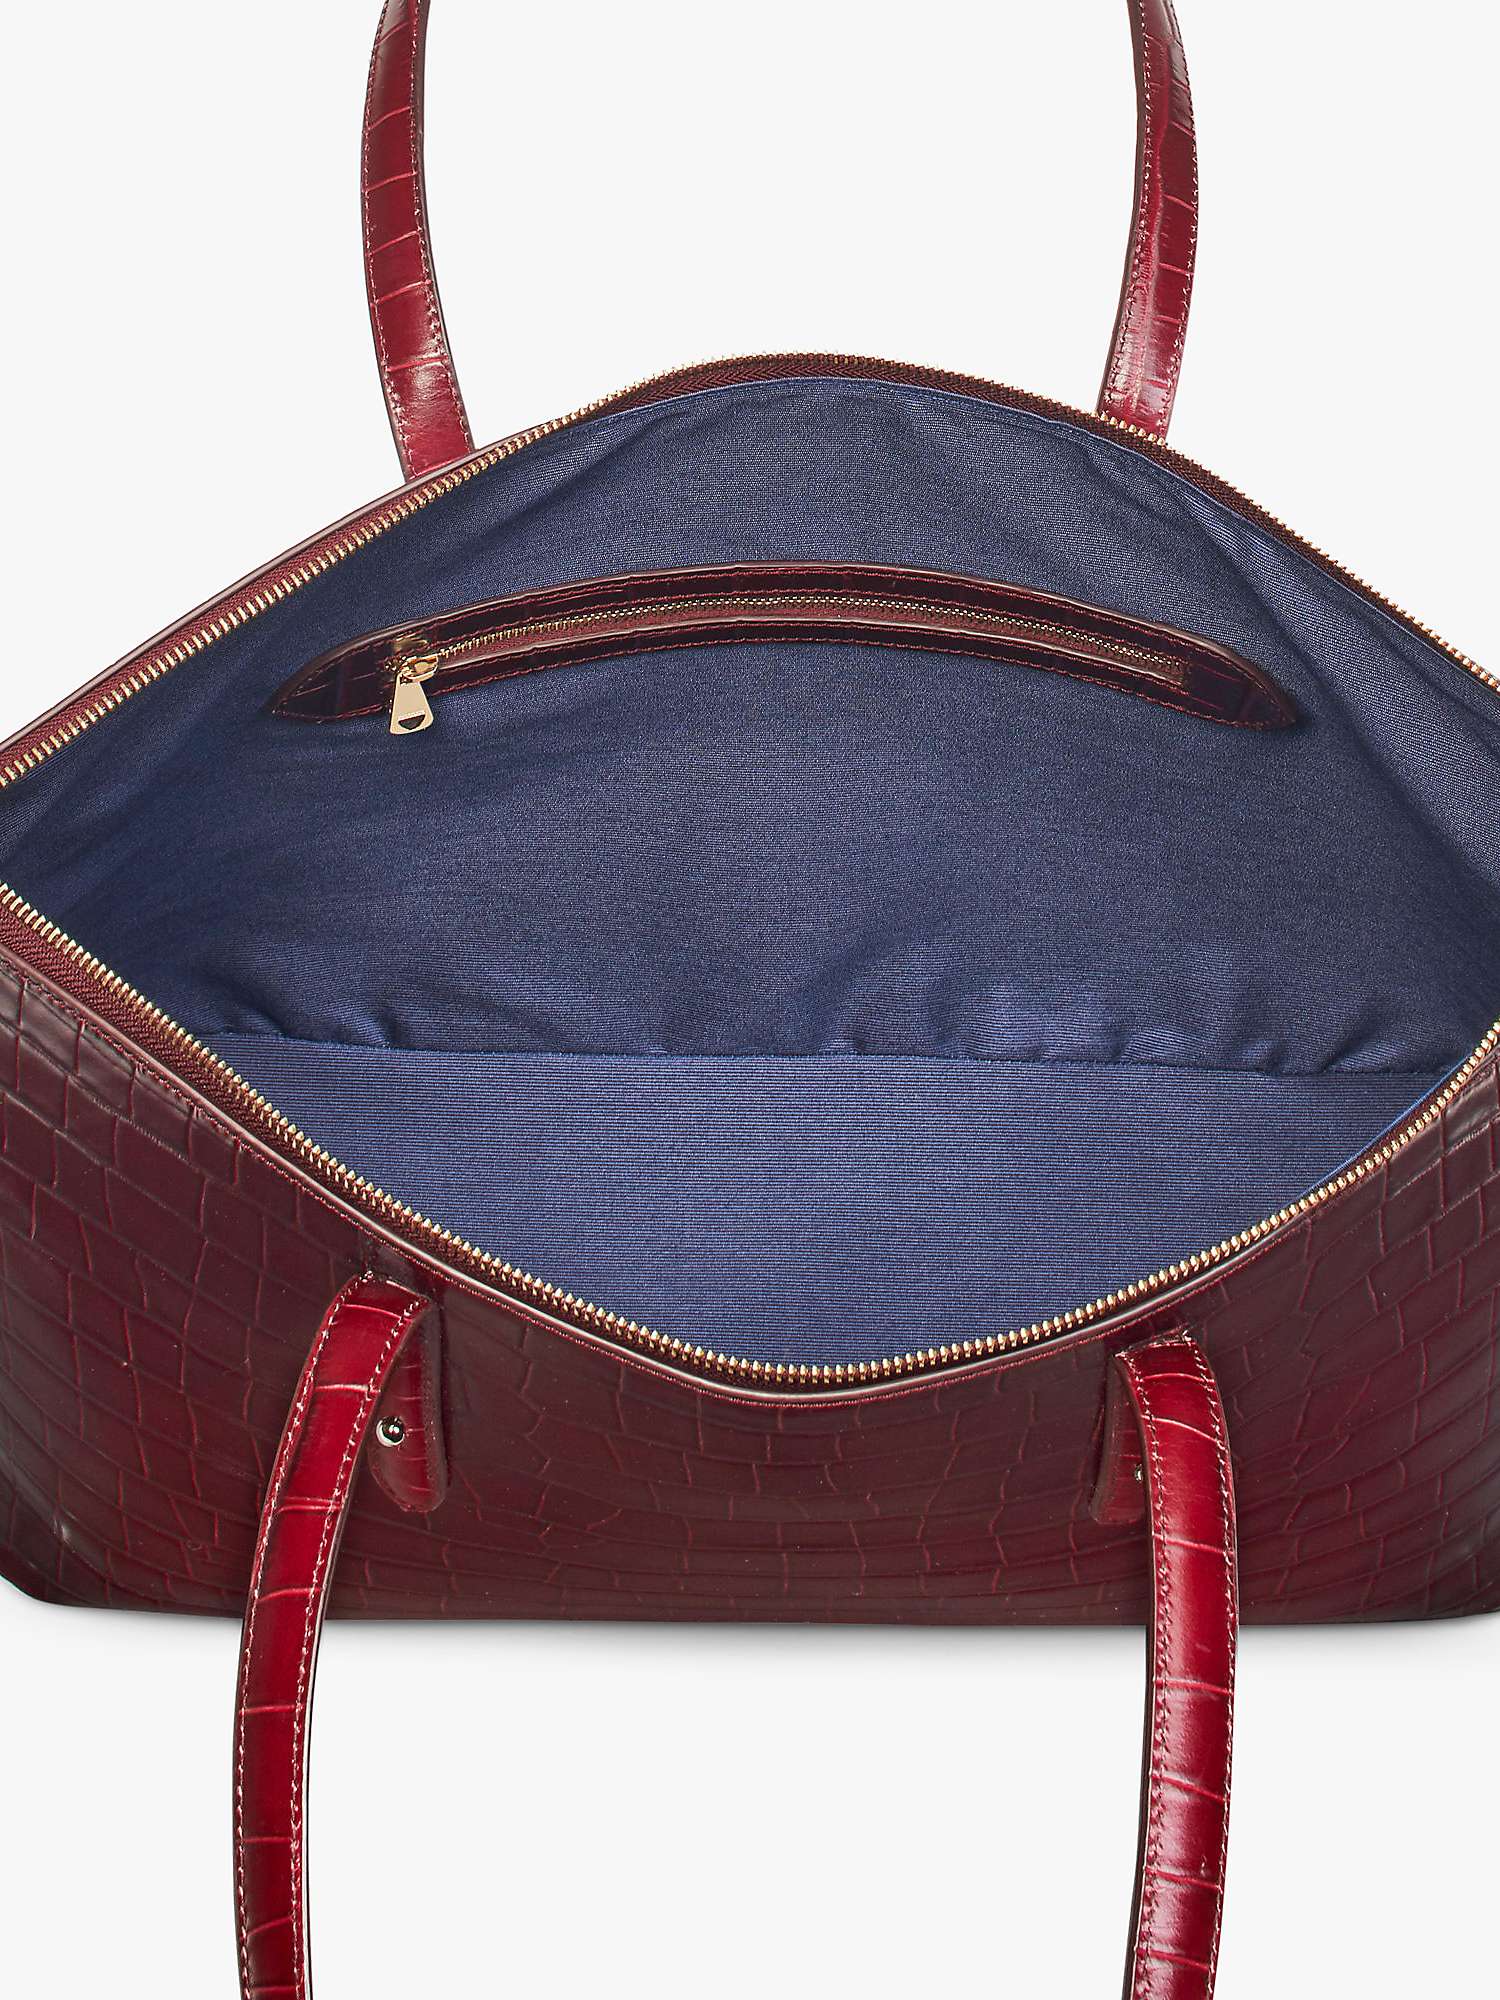 Buy Aspinal of London Regent Croc Leather Zip Tote Bag Online at johnlewis.com